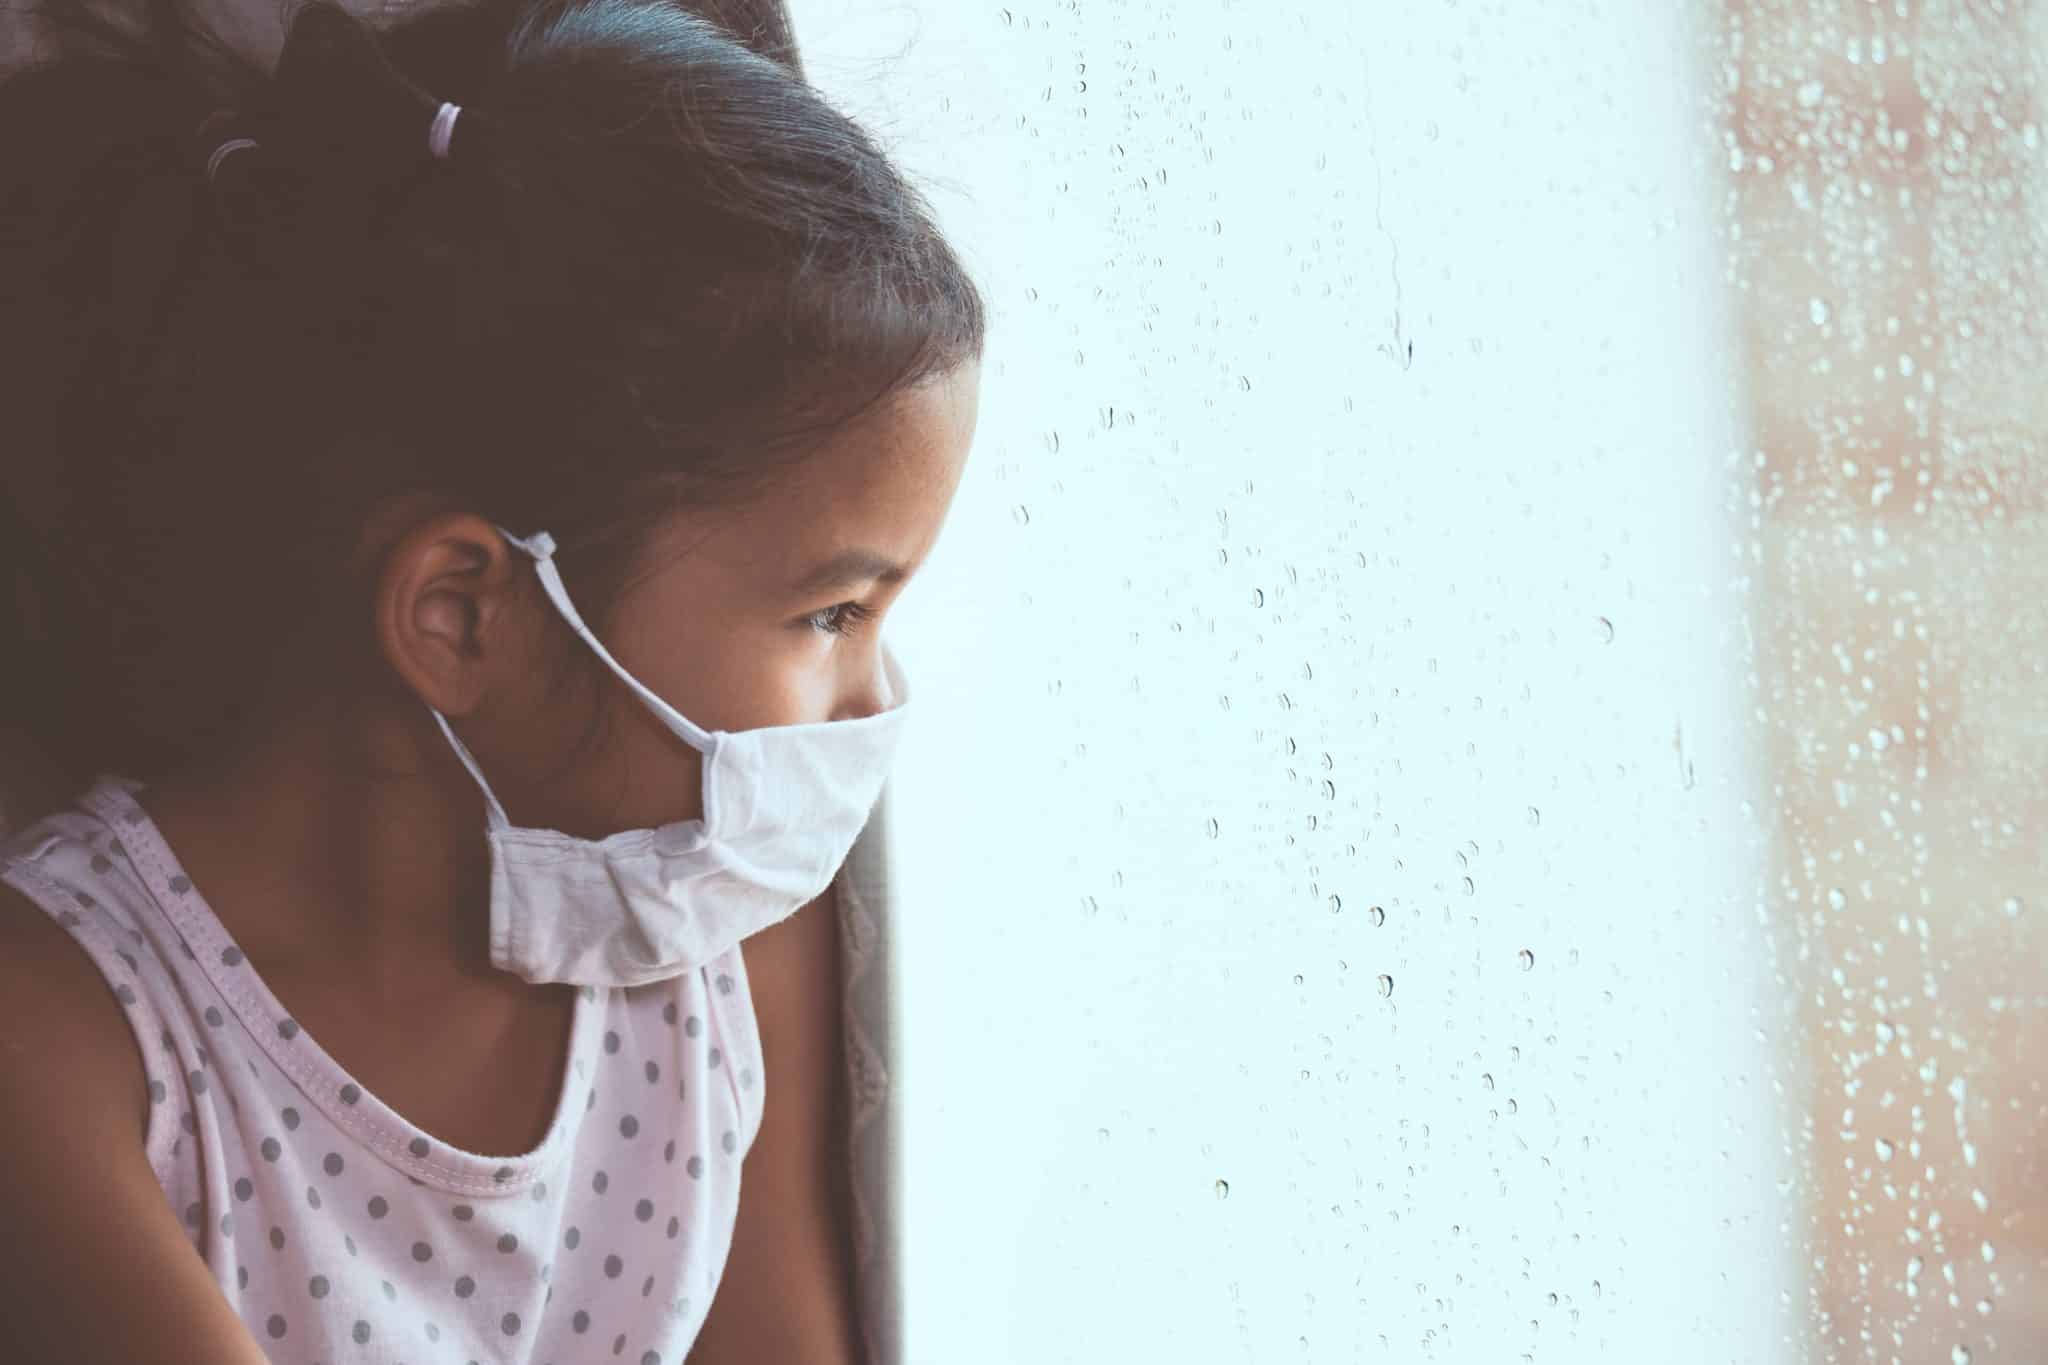 Does Hurricane Season Affect Allergies & Asthma?